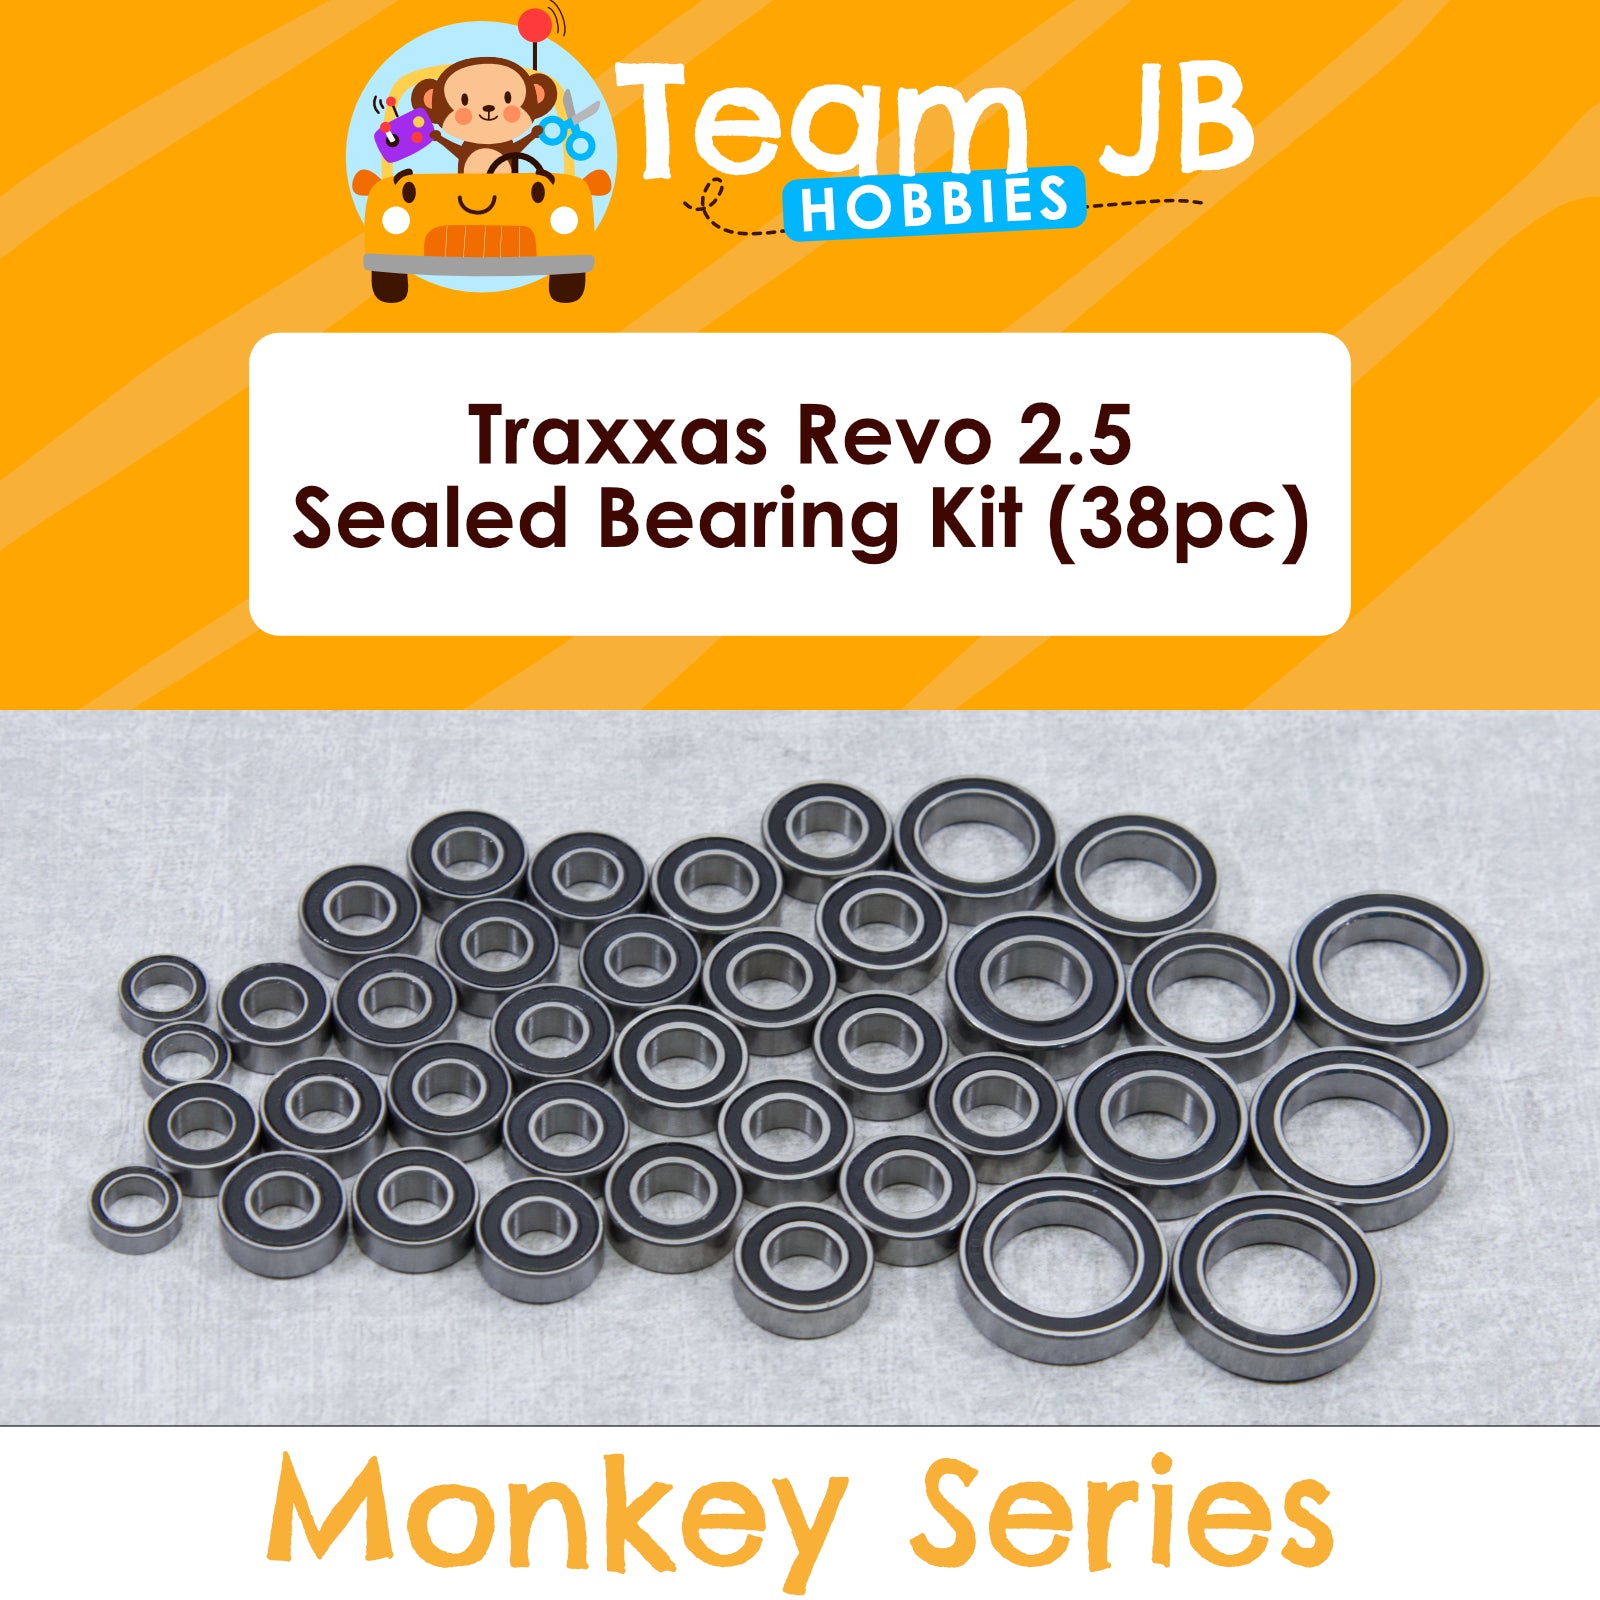 Traxxas Revo 2.5 - Sealed Bearing Kit